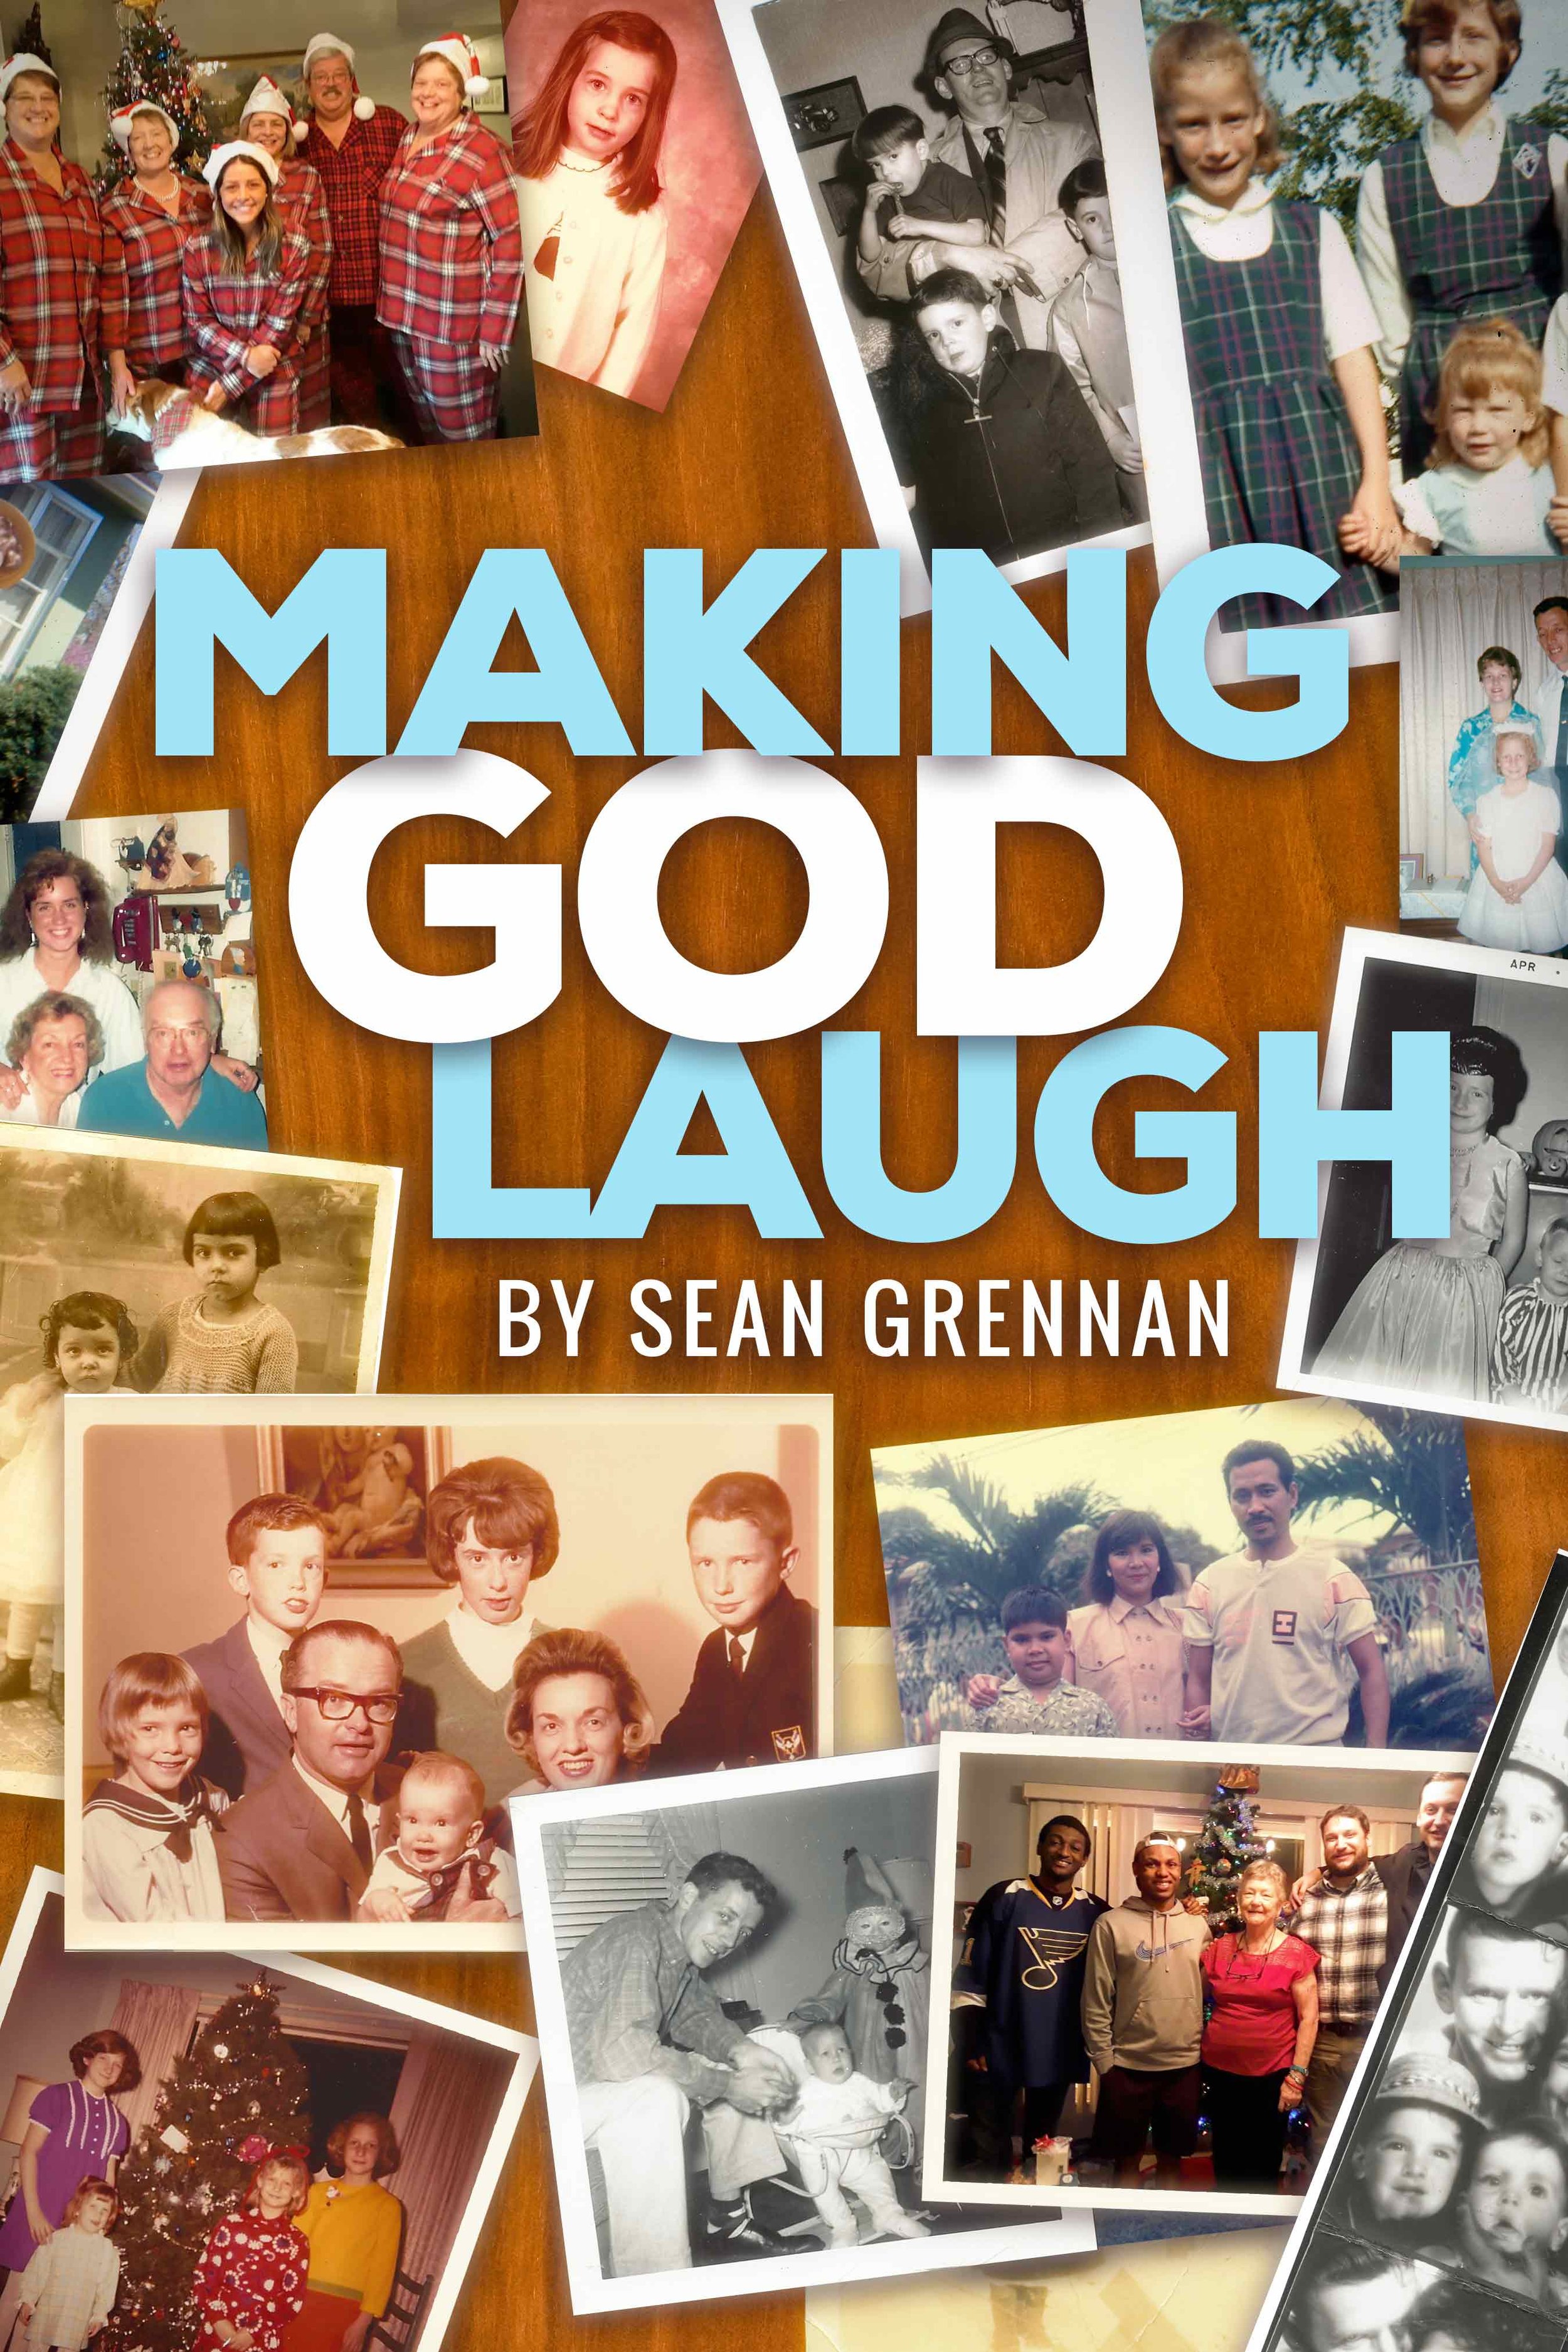 Drama--Queen-Graphics-Theatre-Branding-Making-God-Laugh-Sean-Grennan.jpg